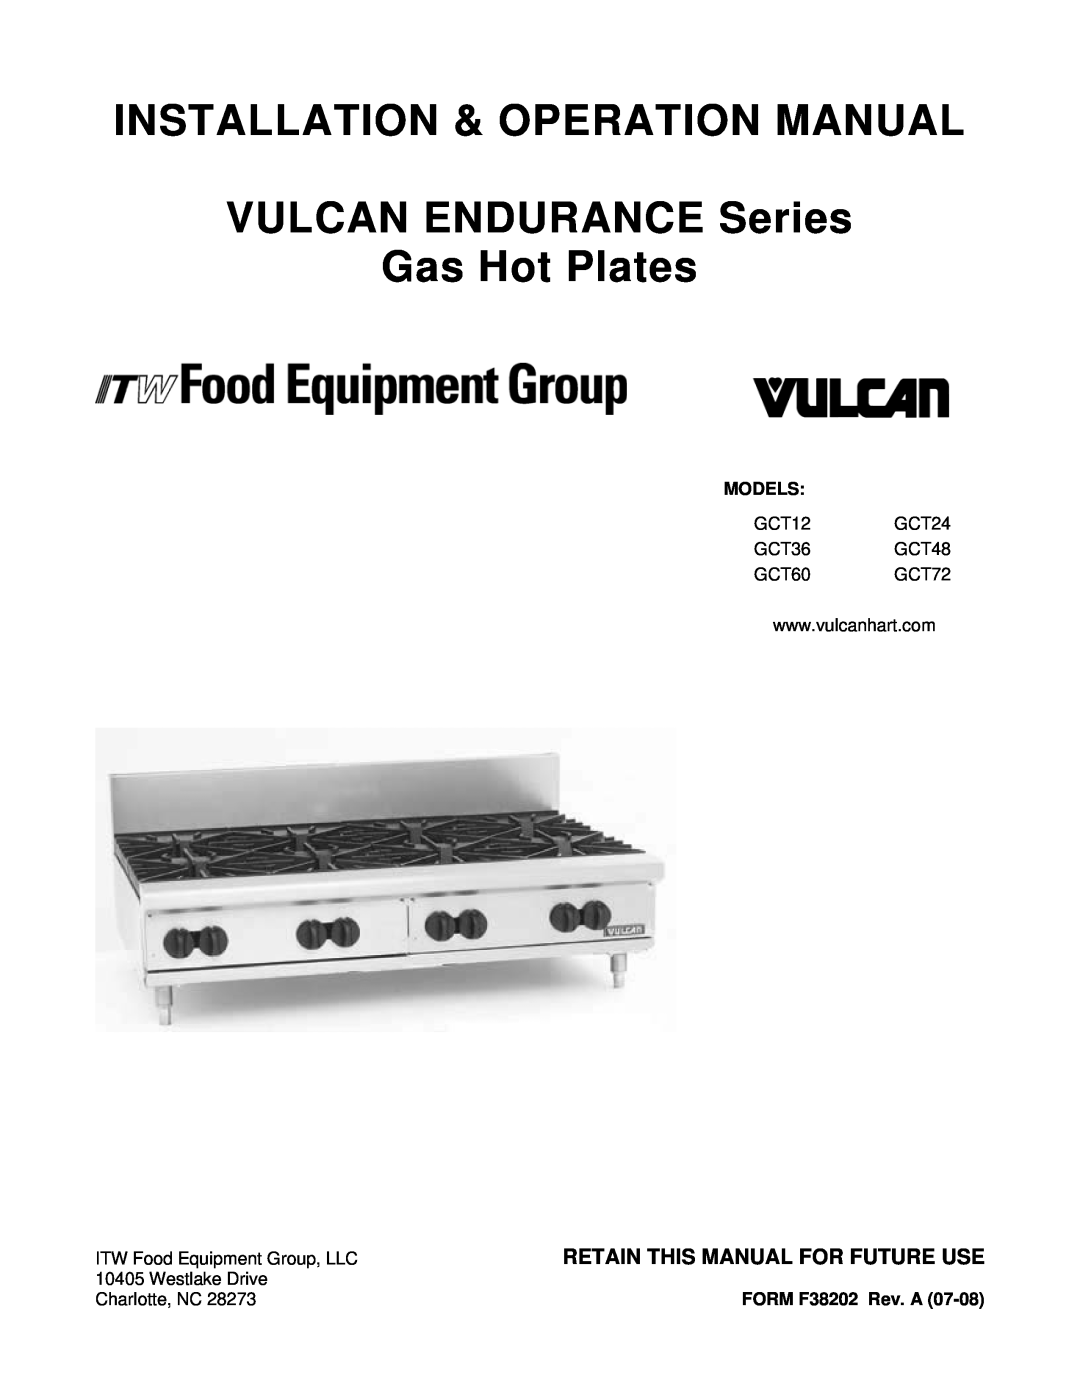 Vulcan-Hart GCT48 operation manual VULCAN ENDURANCE Series Gas Hot Plates, Retain This Manual For Future Use, Models 